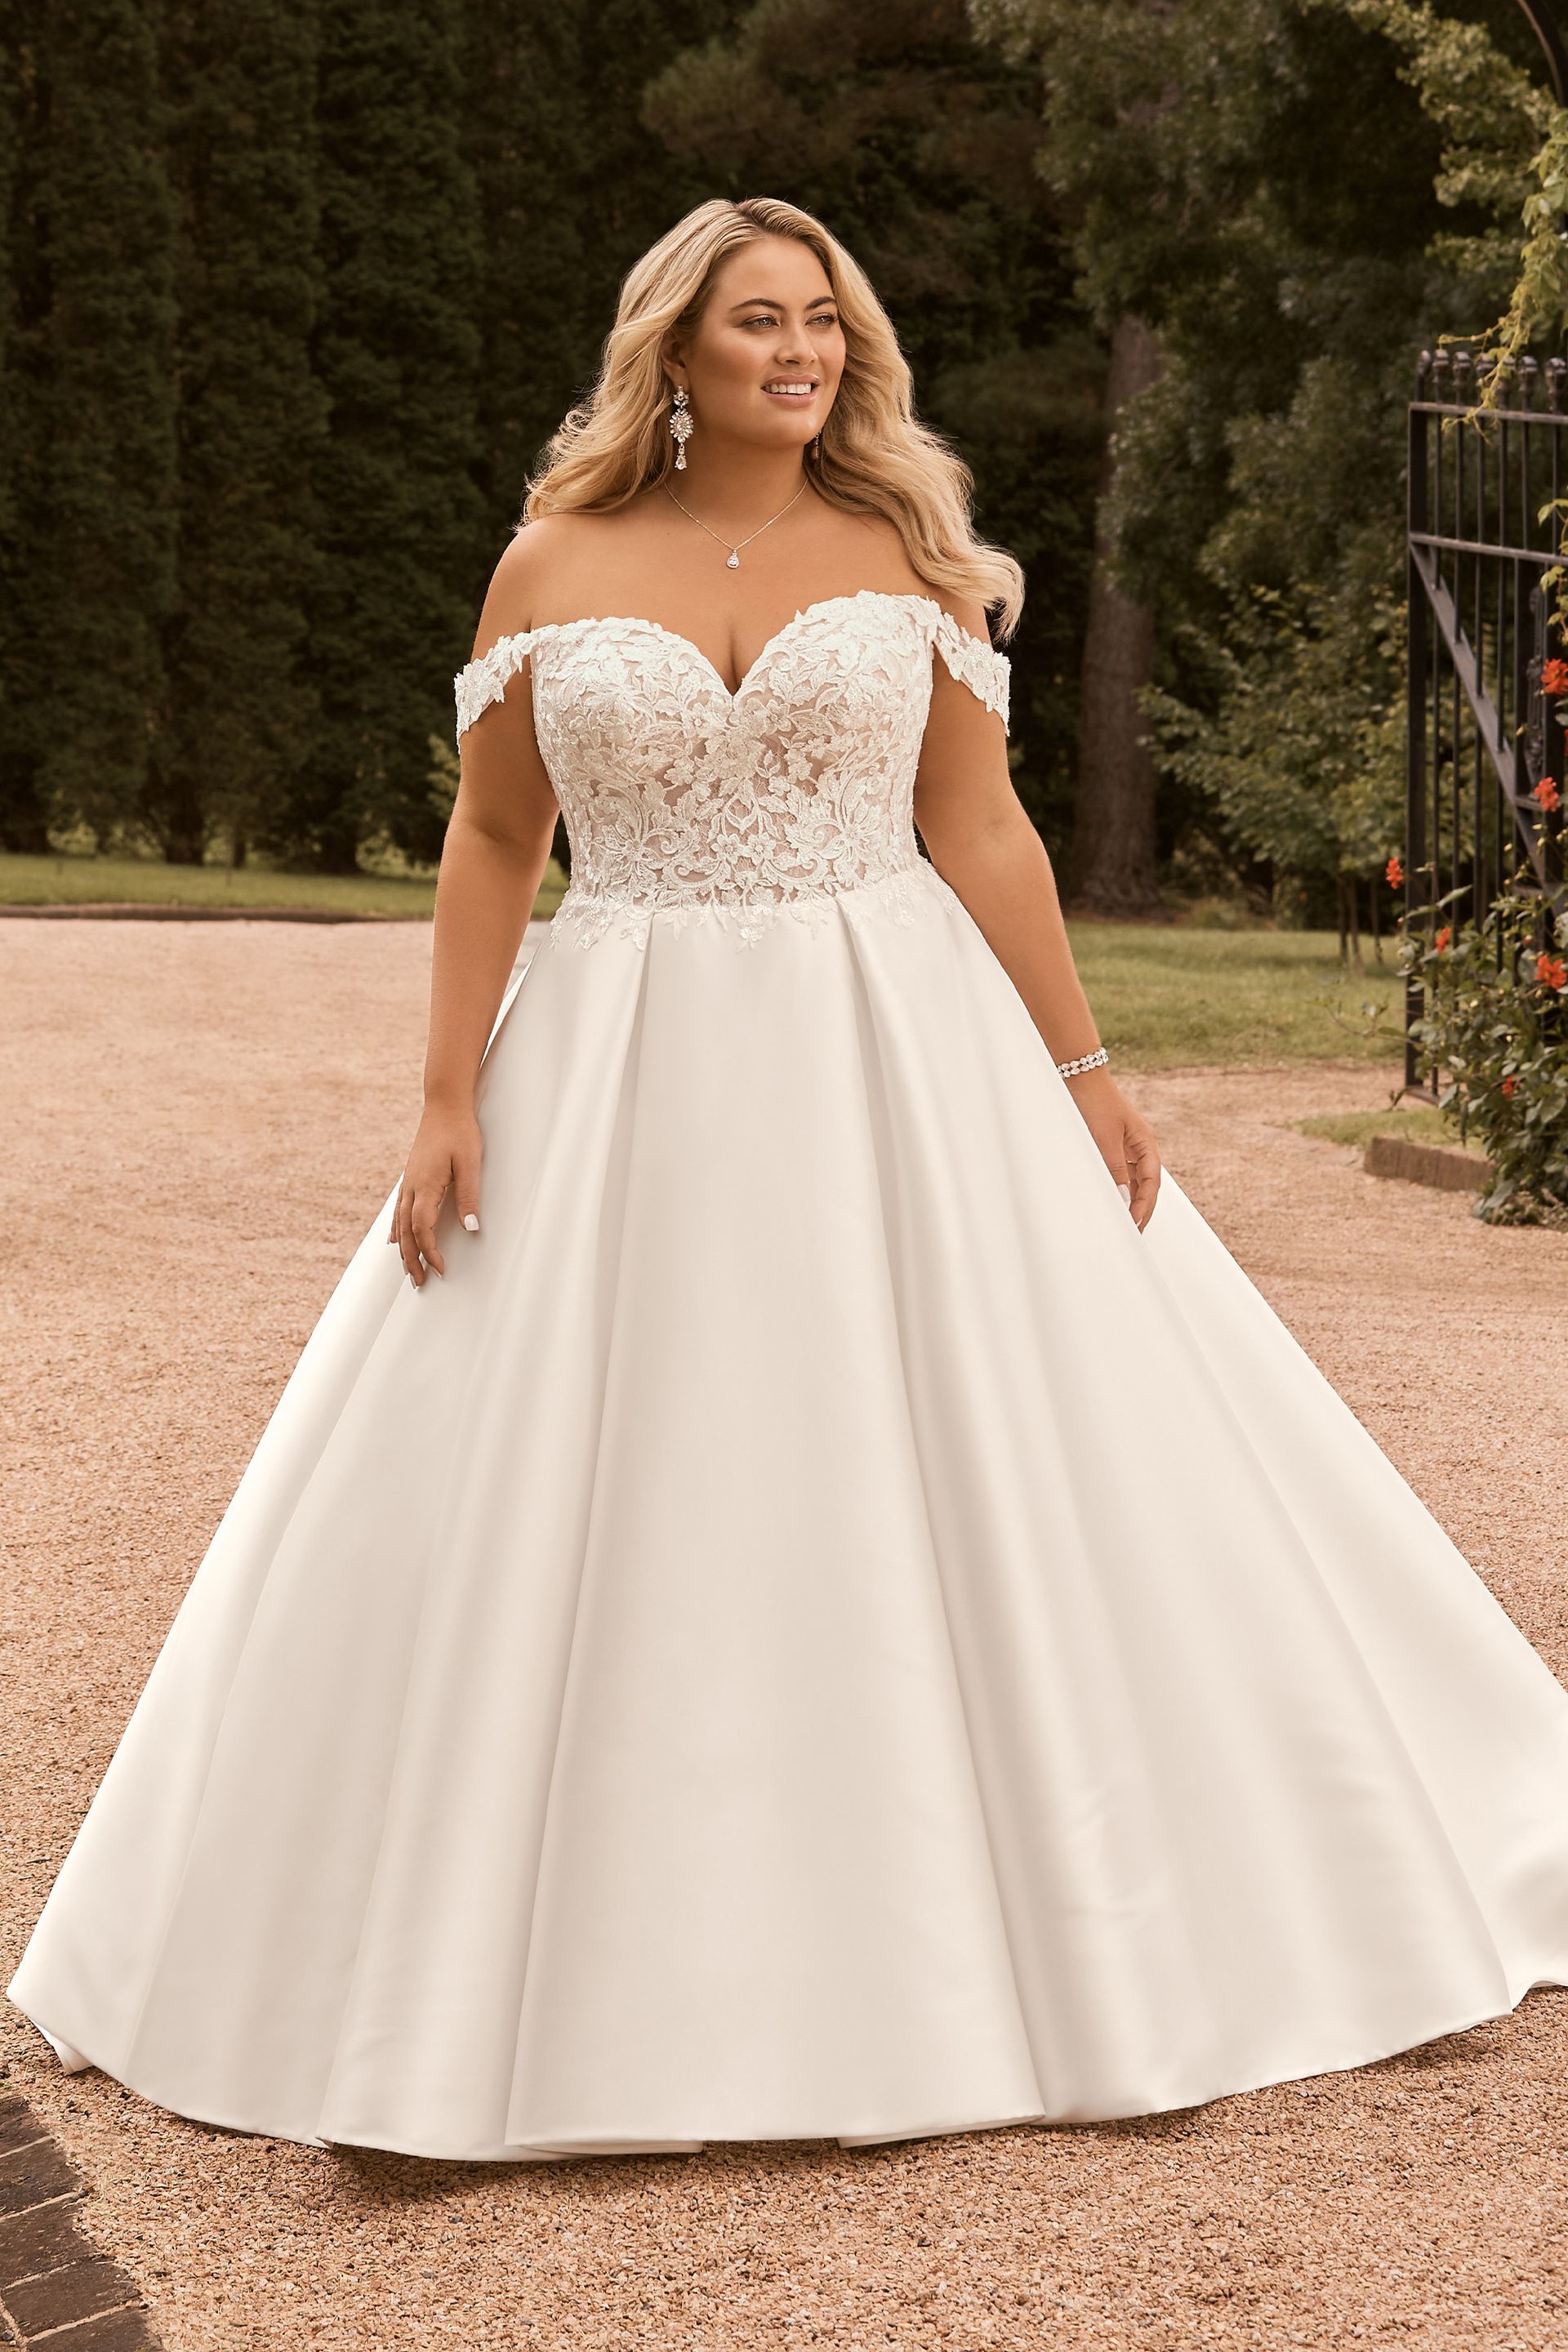 Sopia Tolli Wedding Gown Y22182 at Fifi's Bridal in Elmhurst, Il